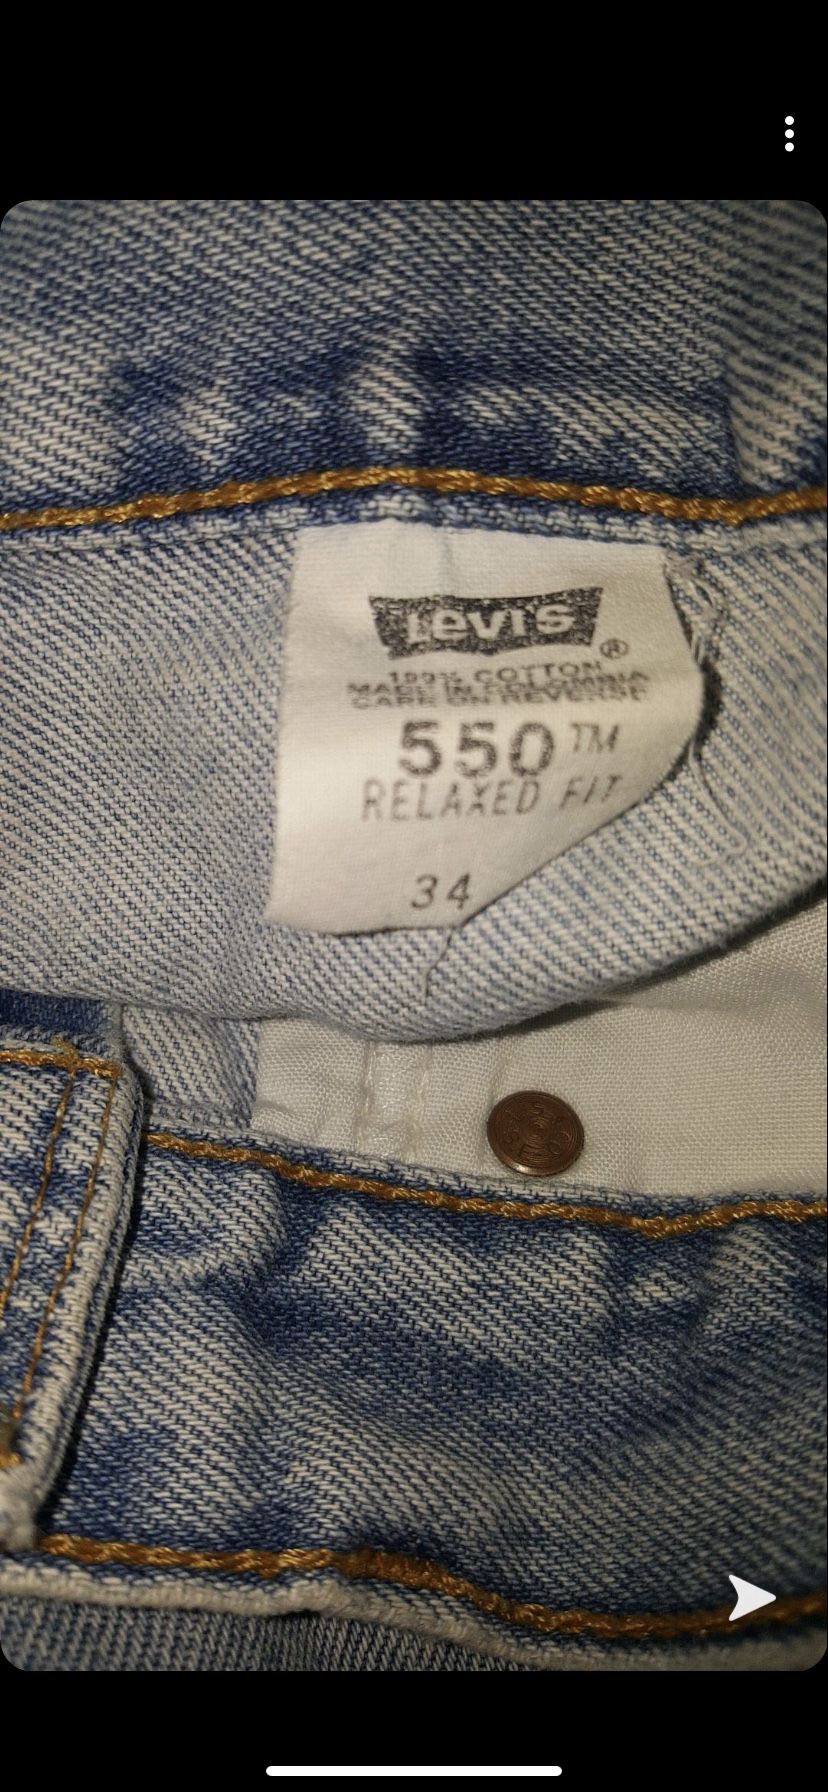 Levi’s shorts